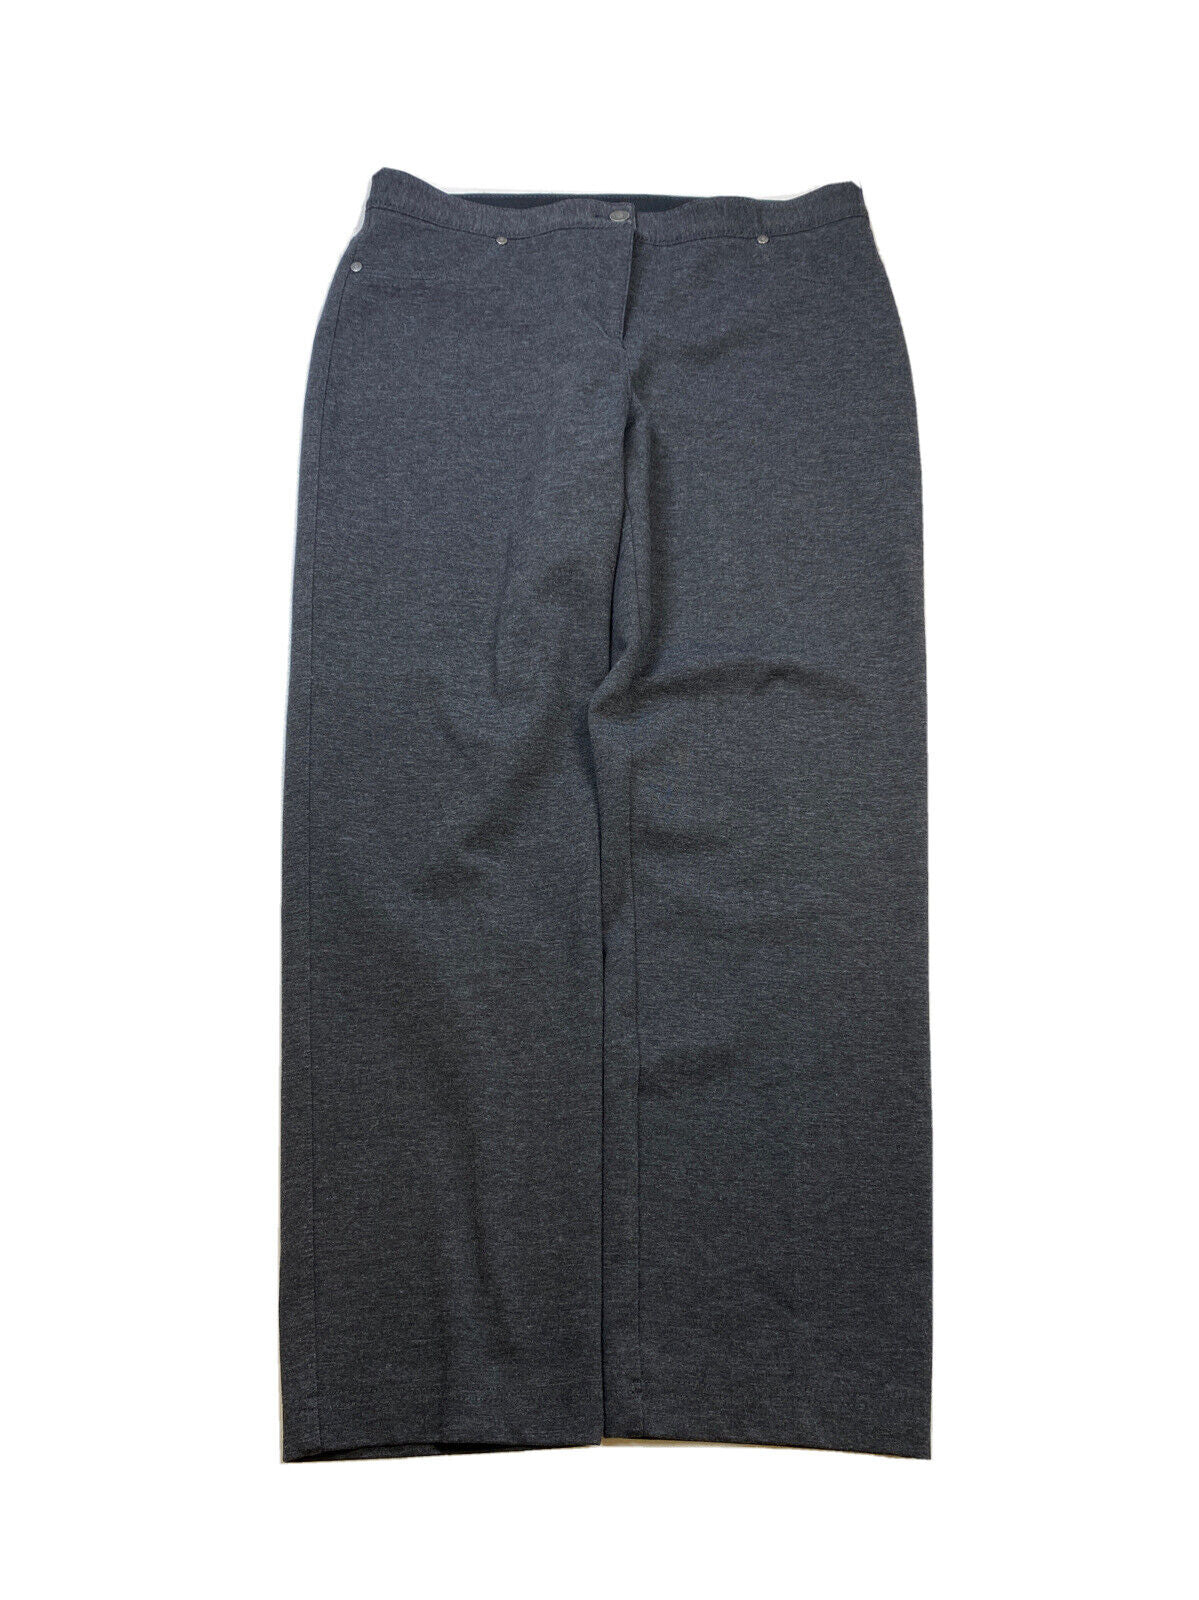 Chico's Women's Gray Stretch Waist Straight Casual Pants Sz 2/12 Short